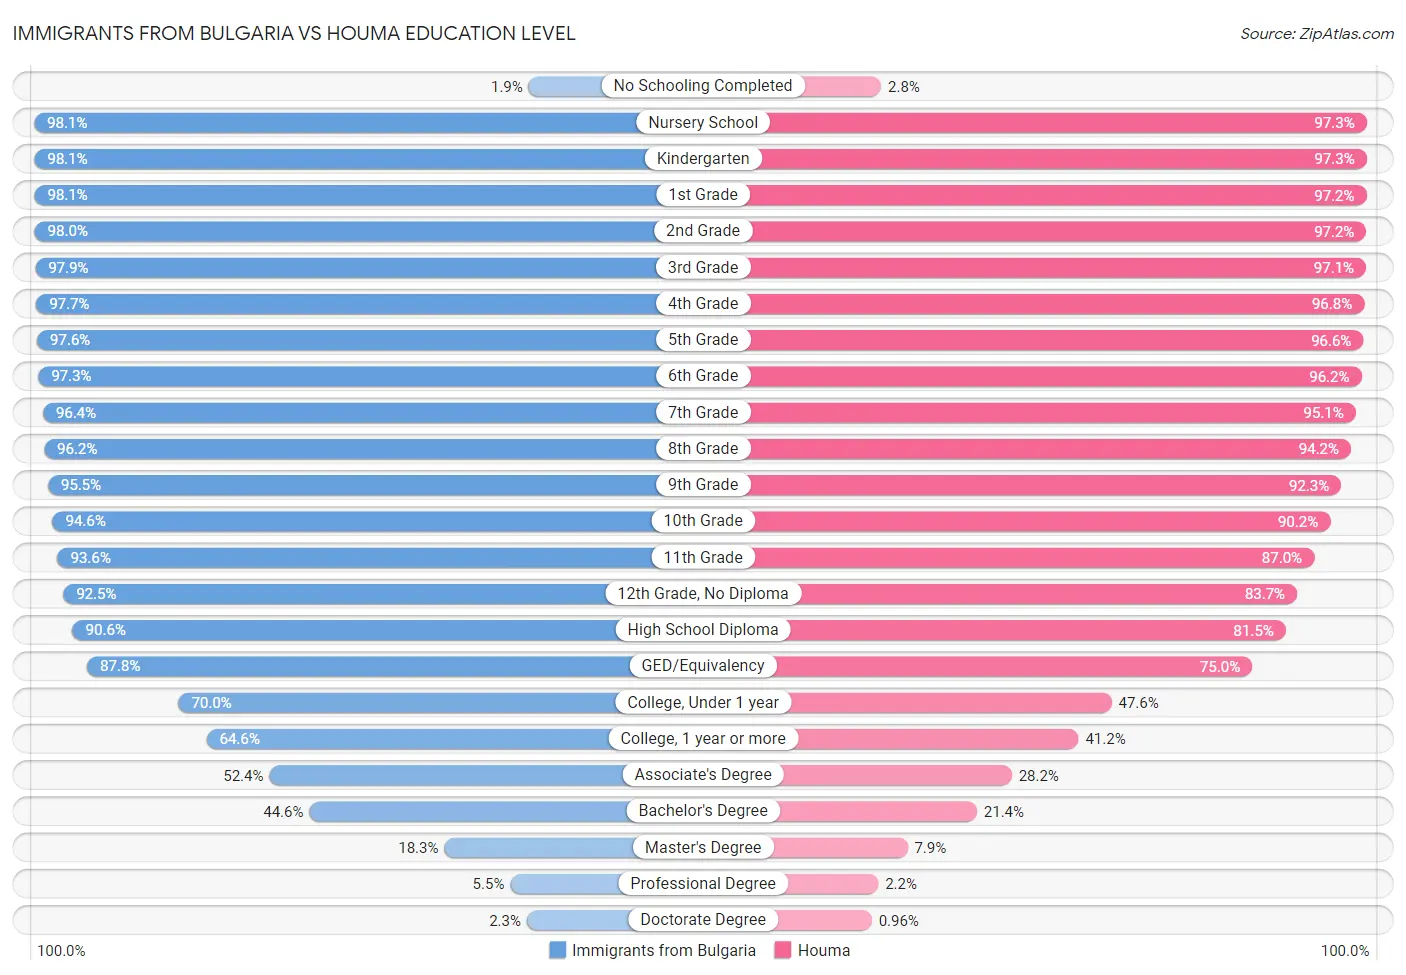 Immigrants from Bulgaria vs Houma Education Level